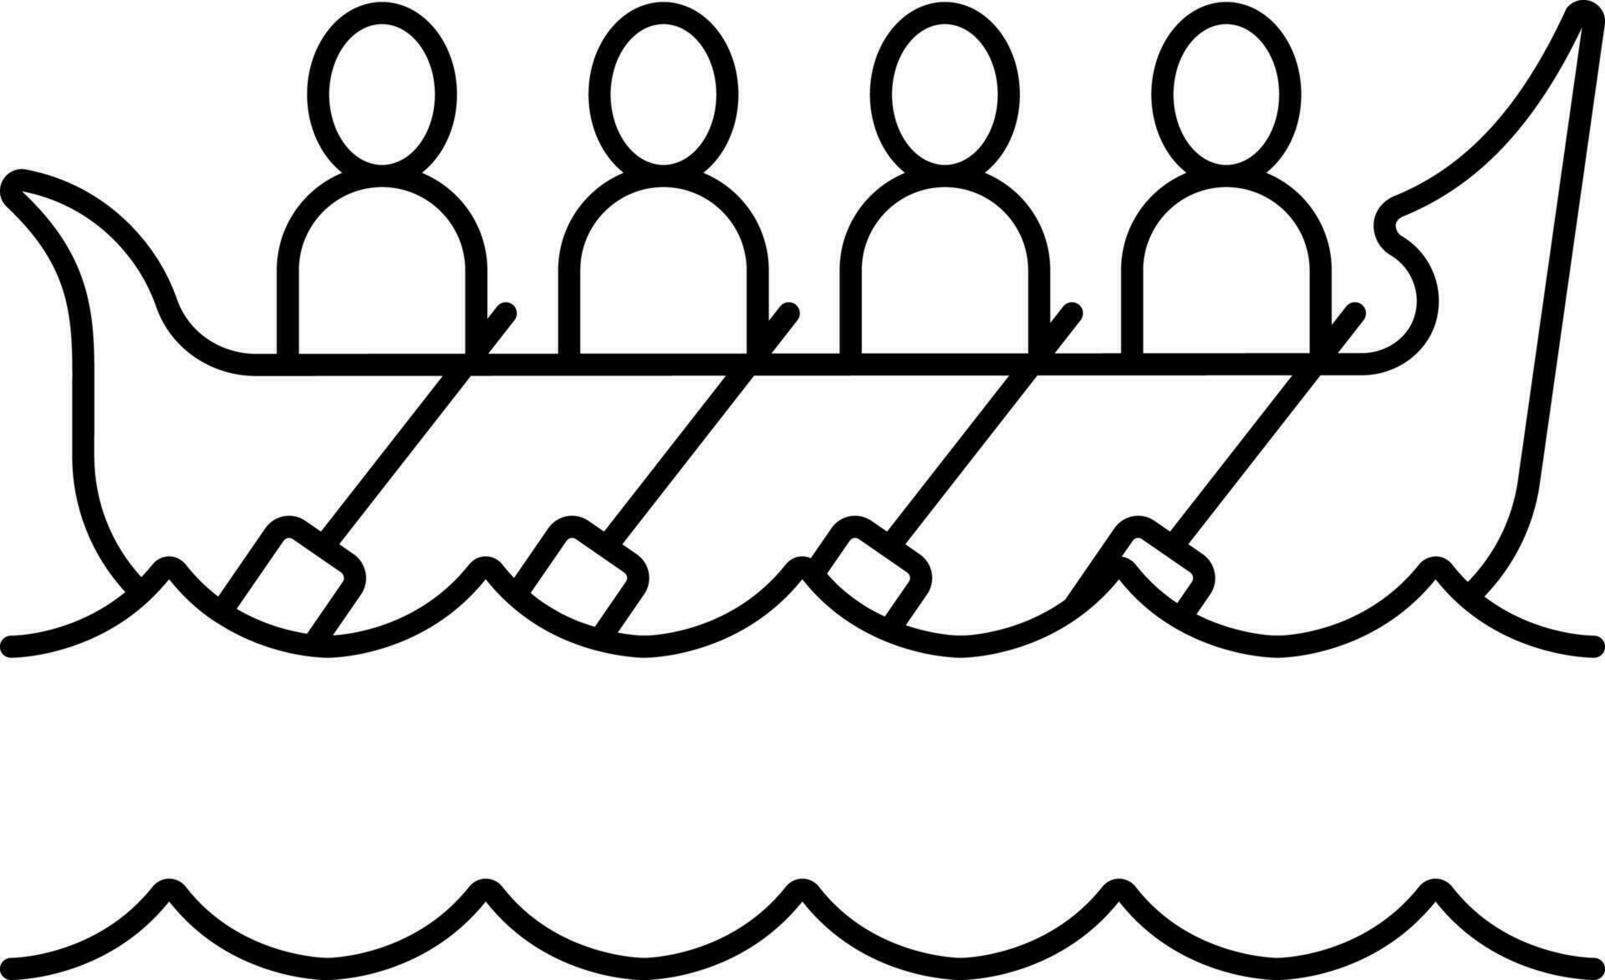 Black Line Art Of People Boating Snake Boat Icon Or Symbol. vector